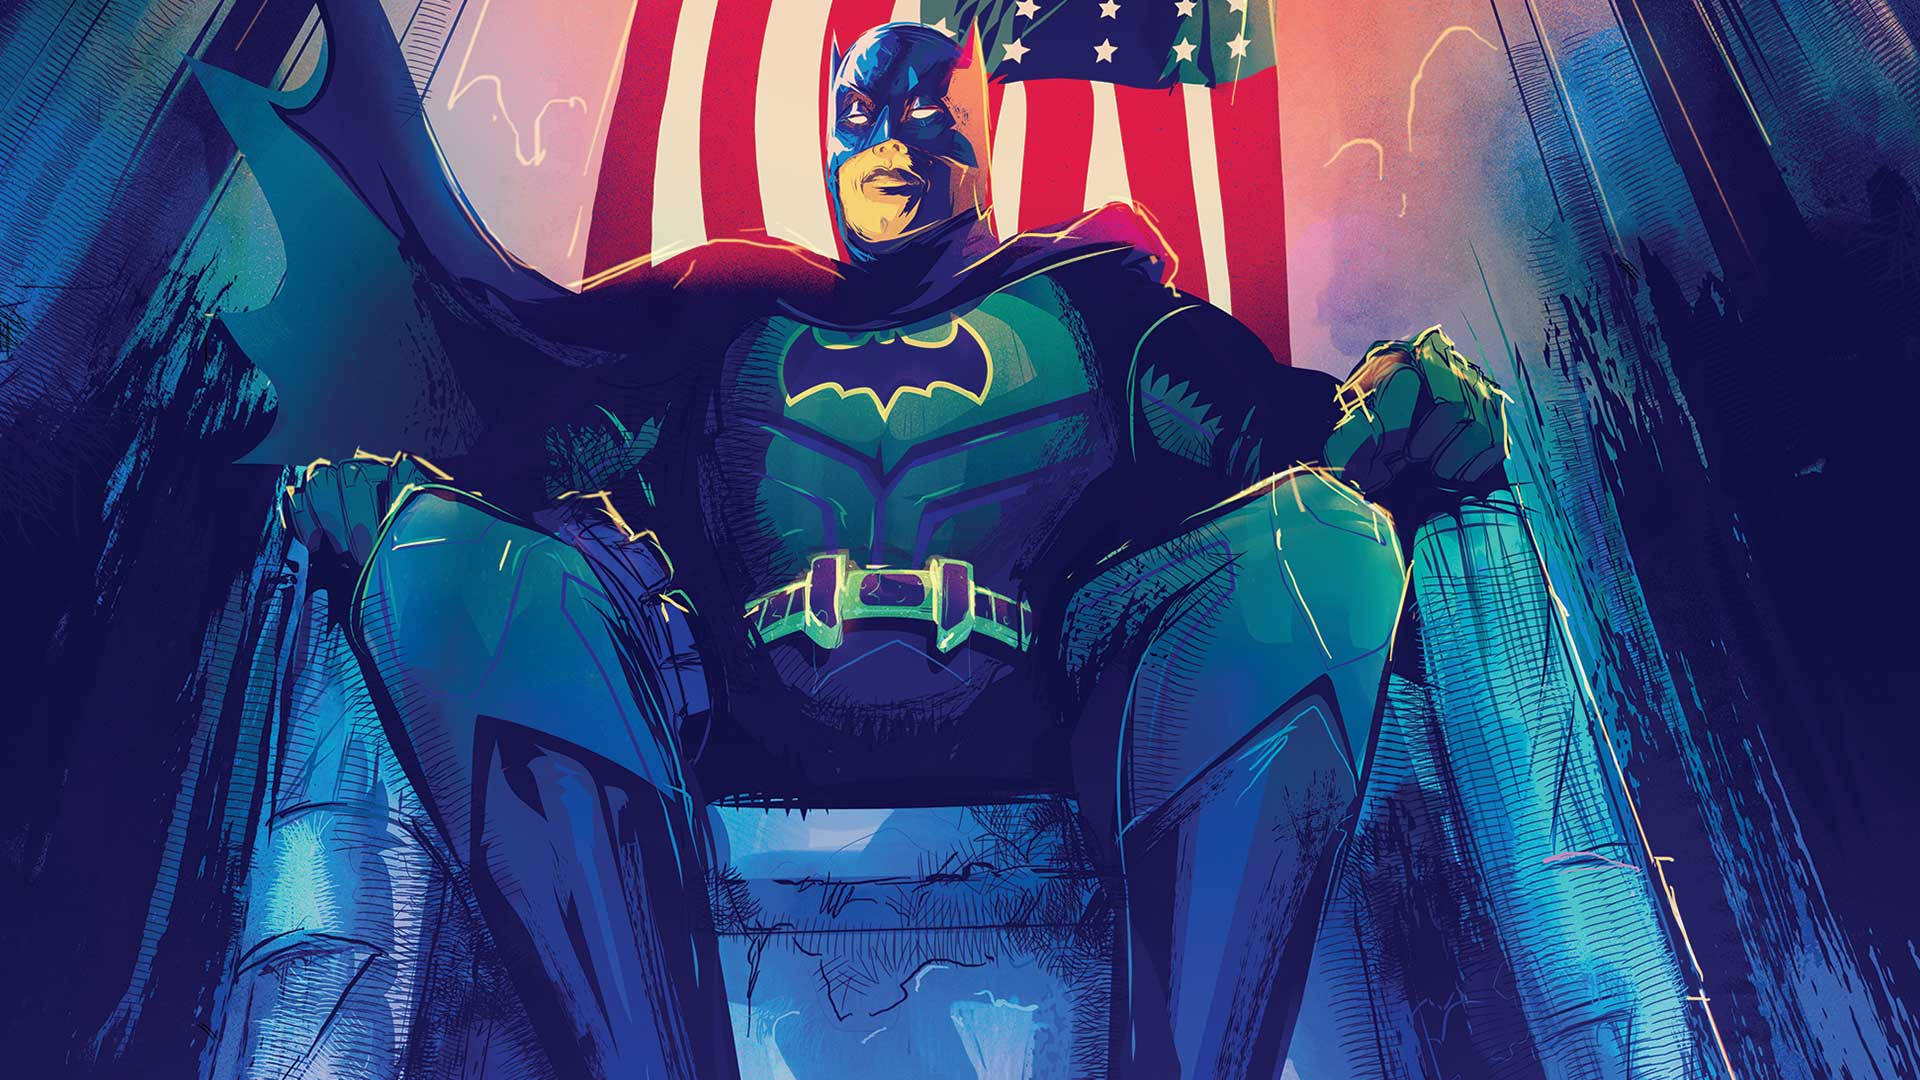 All-Star Batman #9 Review